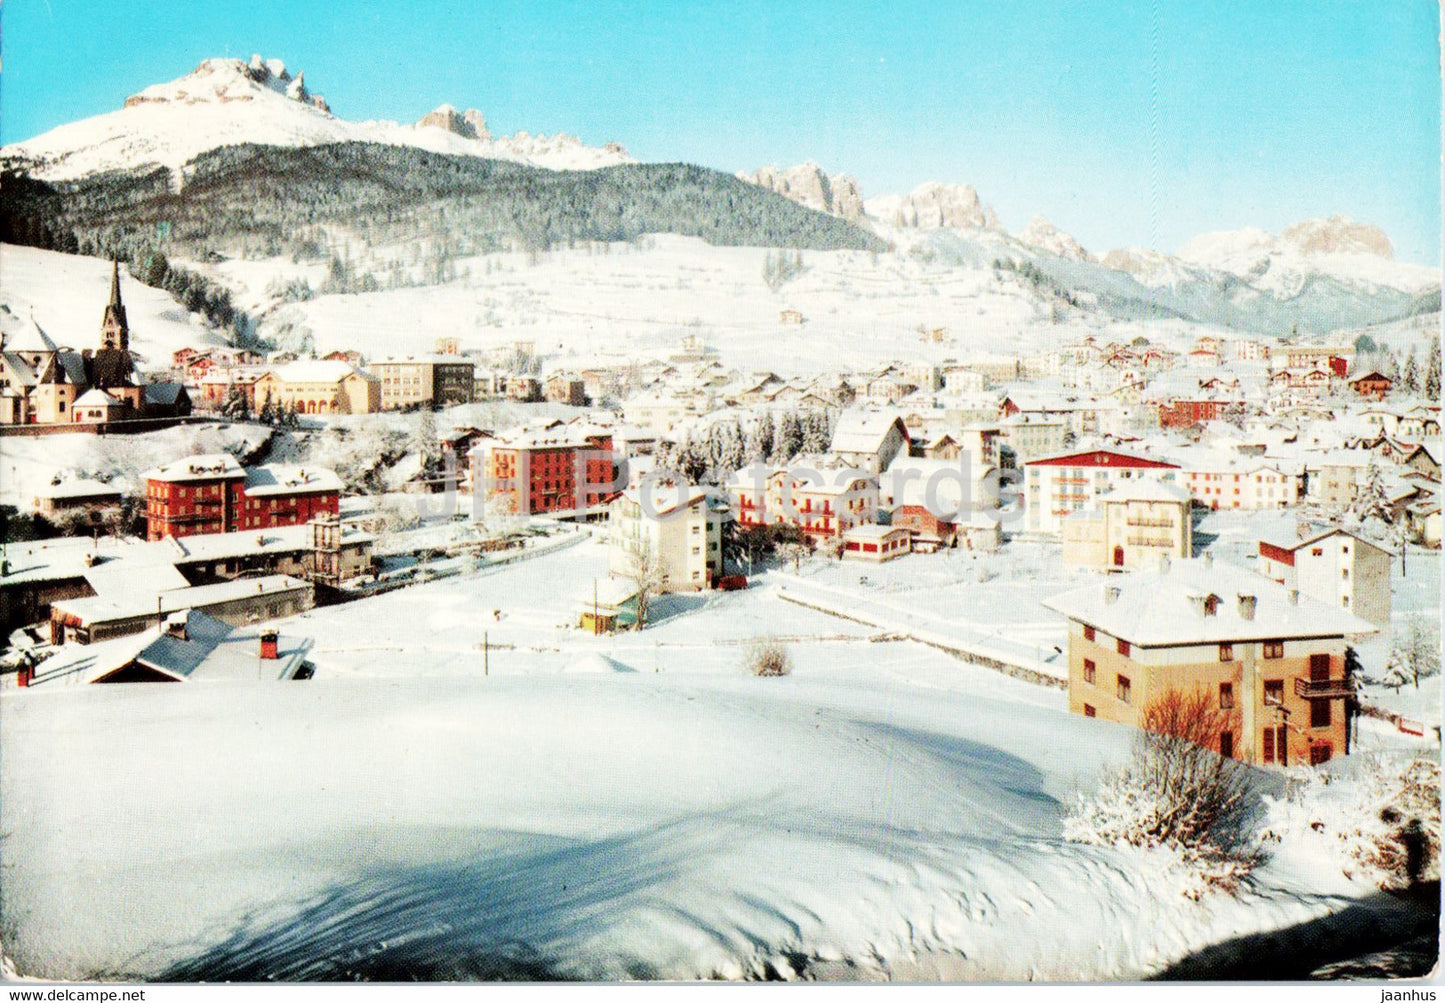 Moena 1199 m - Catinaccio - Sassolungo - Dolomiti - Trentino - 1975 - Italy - used - JH Postcards